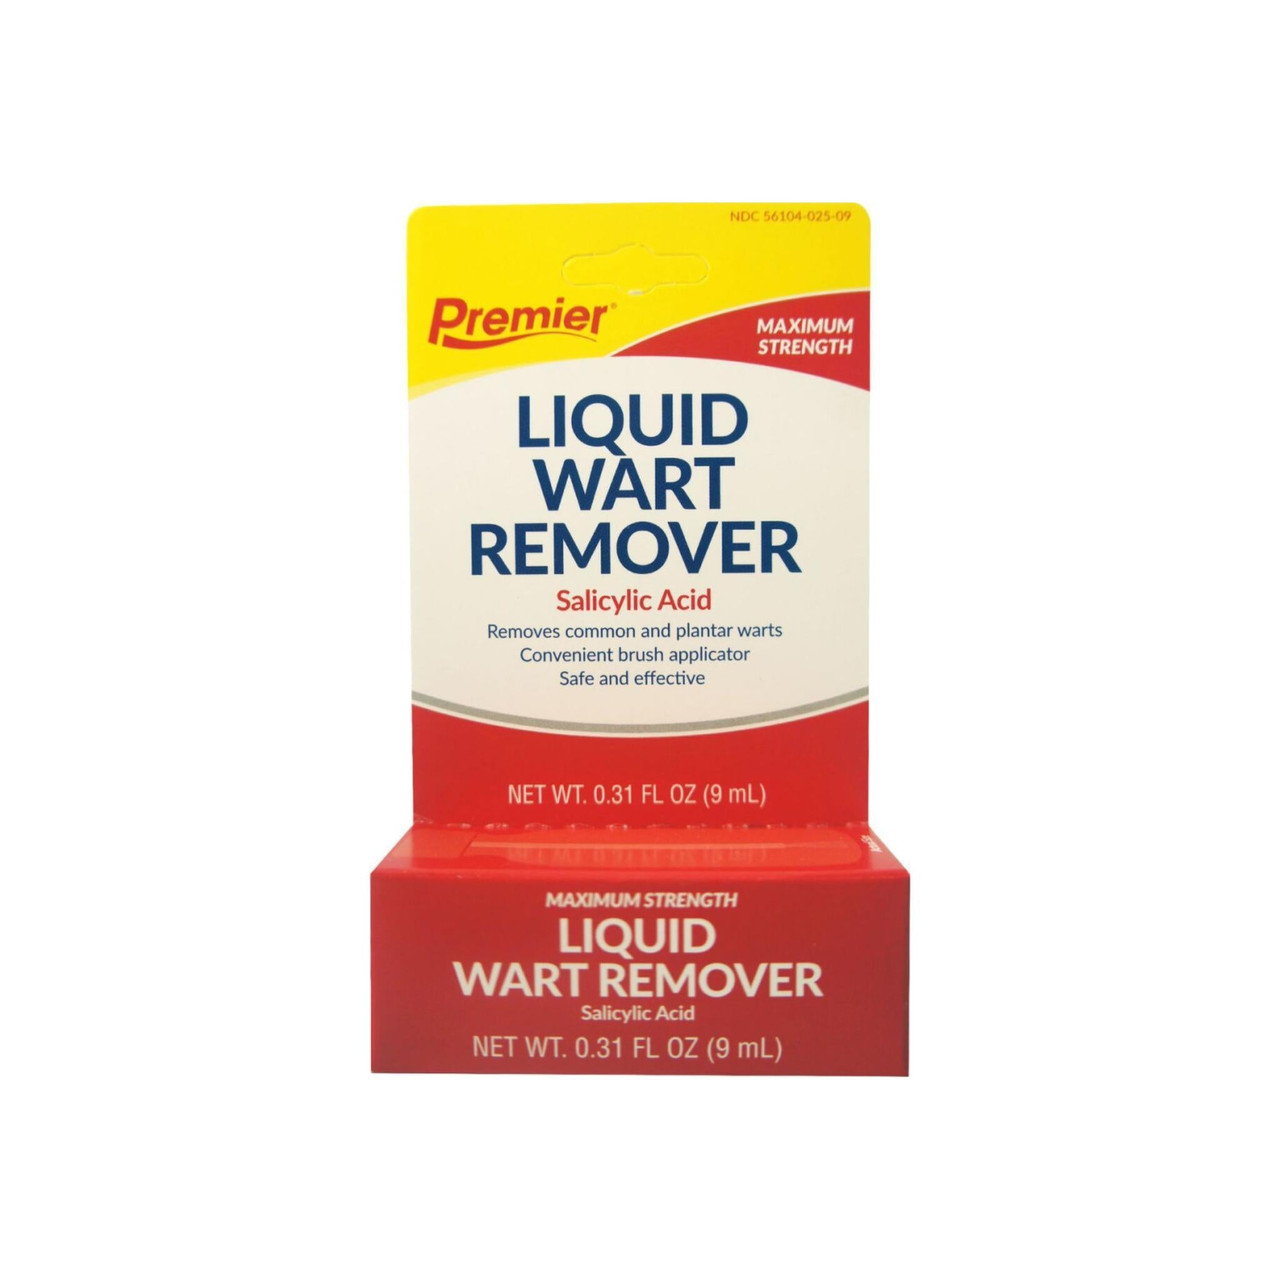 Compound W Wart Remover 17 Strength Liquid 0.31 oz.